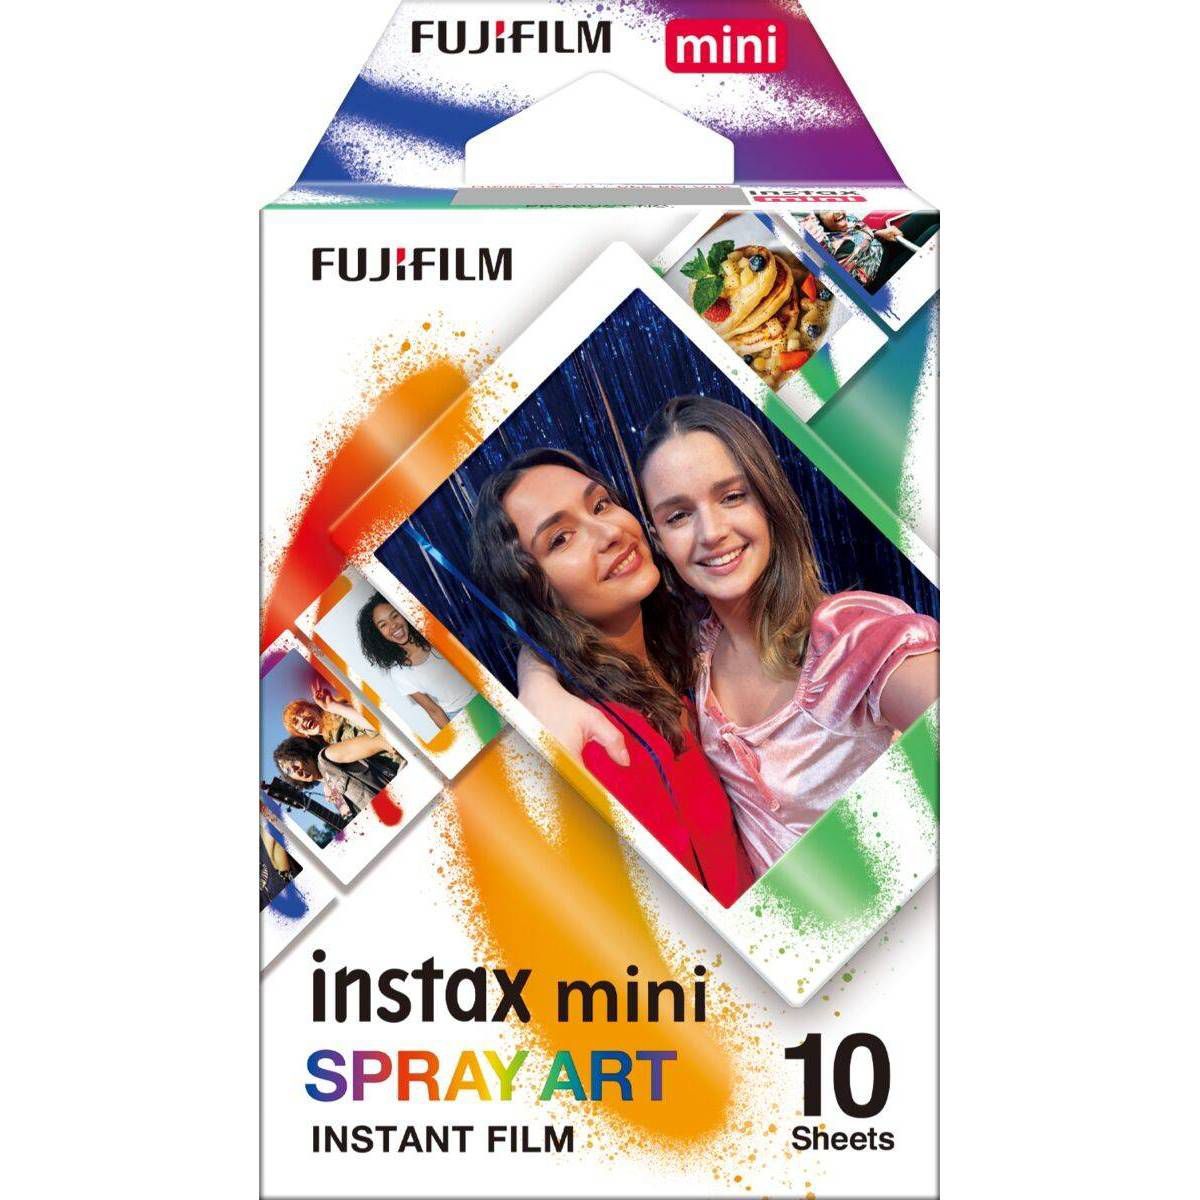 Fujifilm INSTAX MINI Spray Art Instant Film | Target